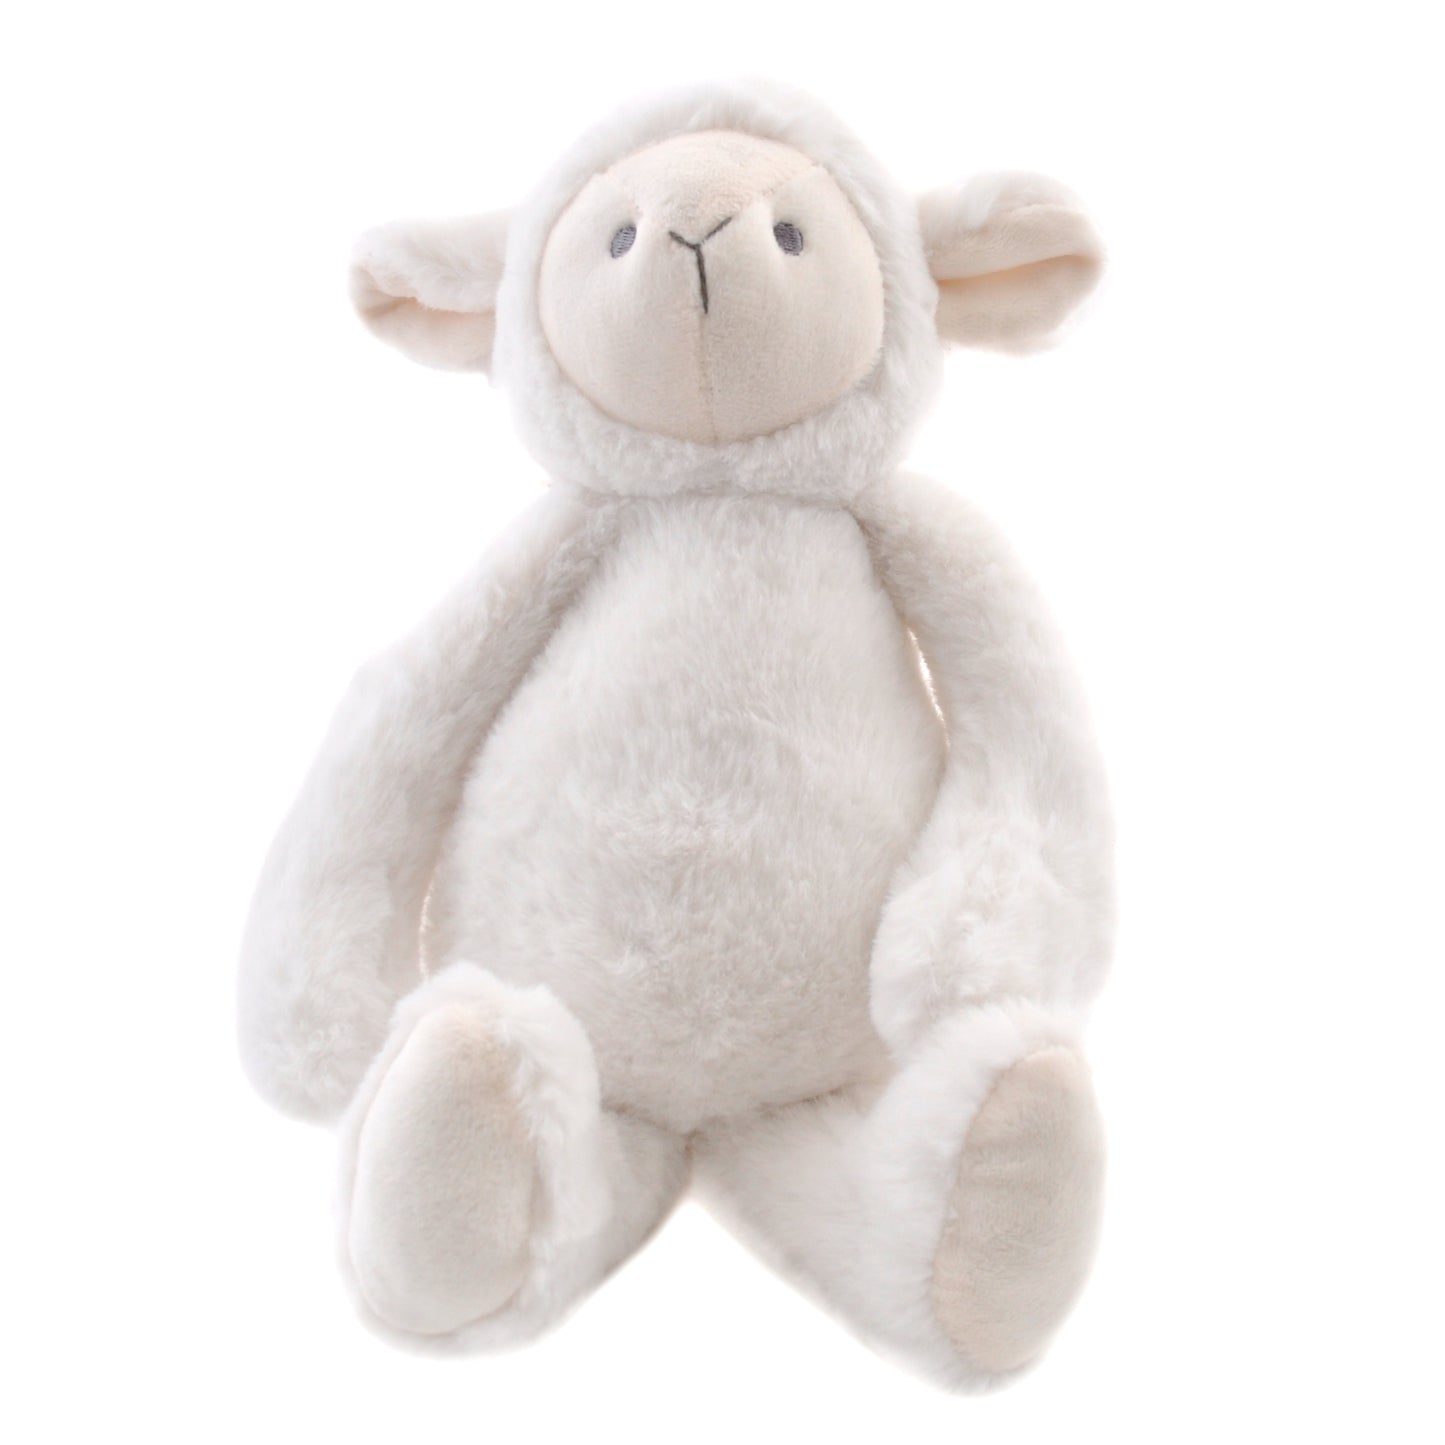 Baby Plush Toy - Lamb